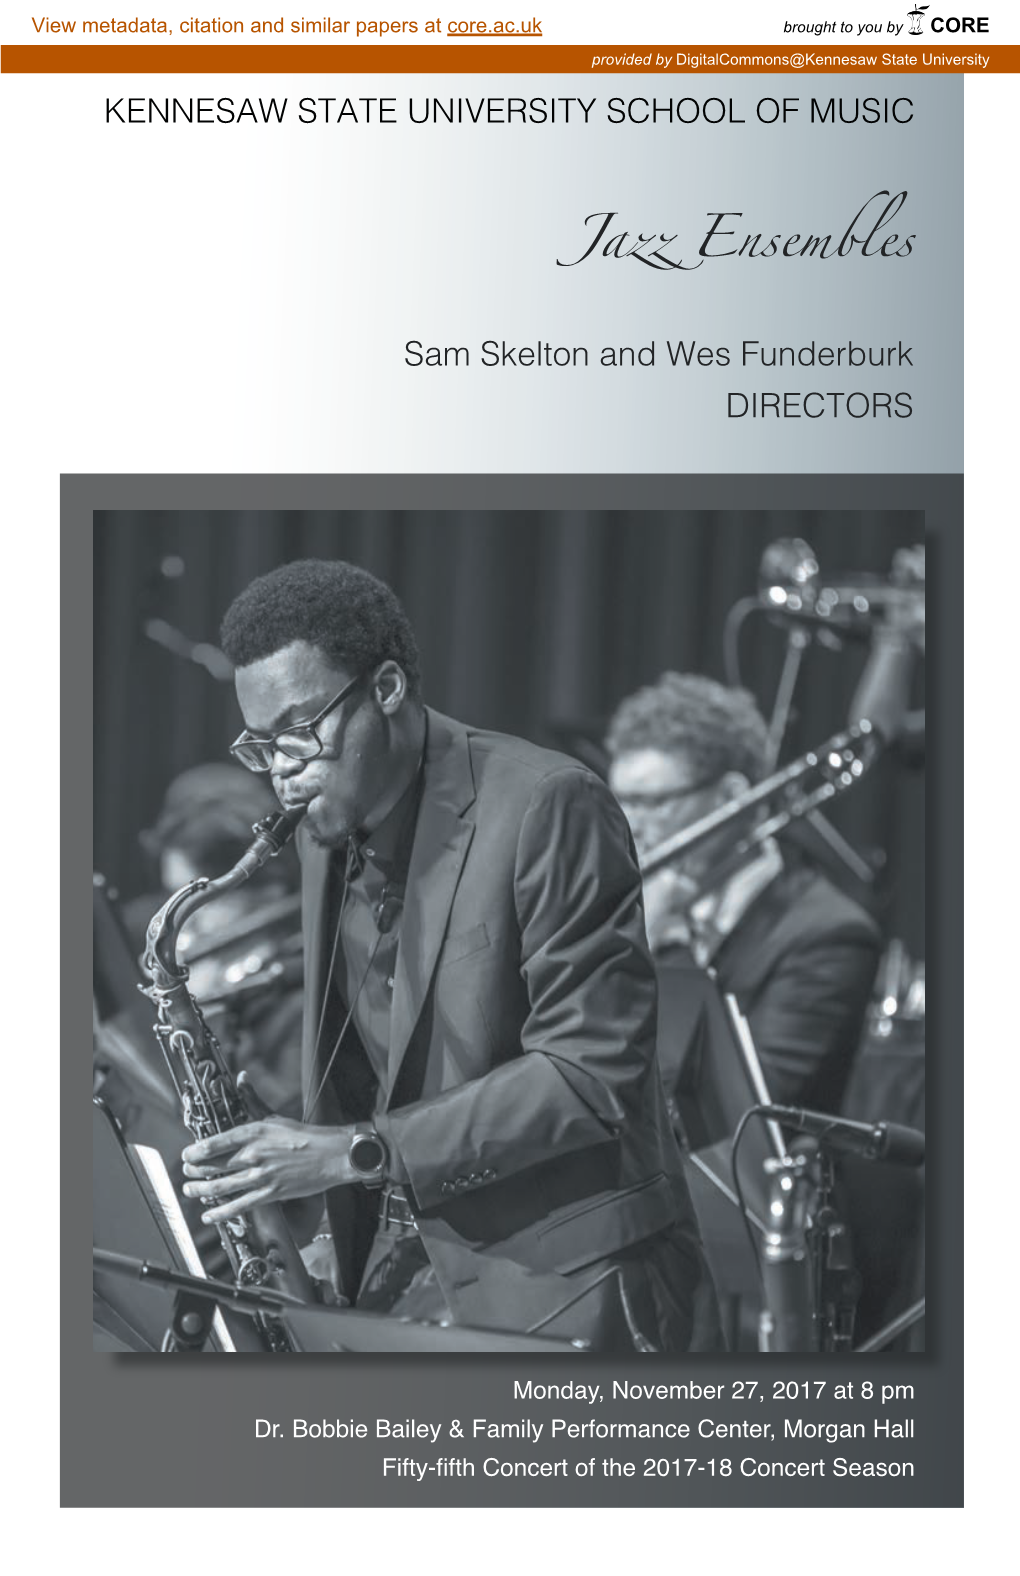 Jazz Ensembles Sam Skelton and Wes Funderburk DIRECTORS